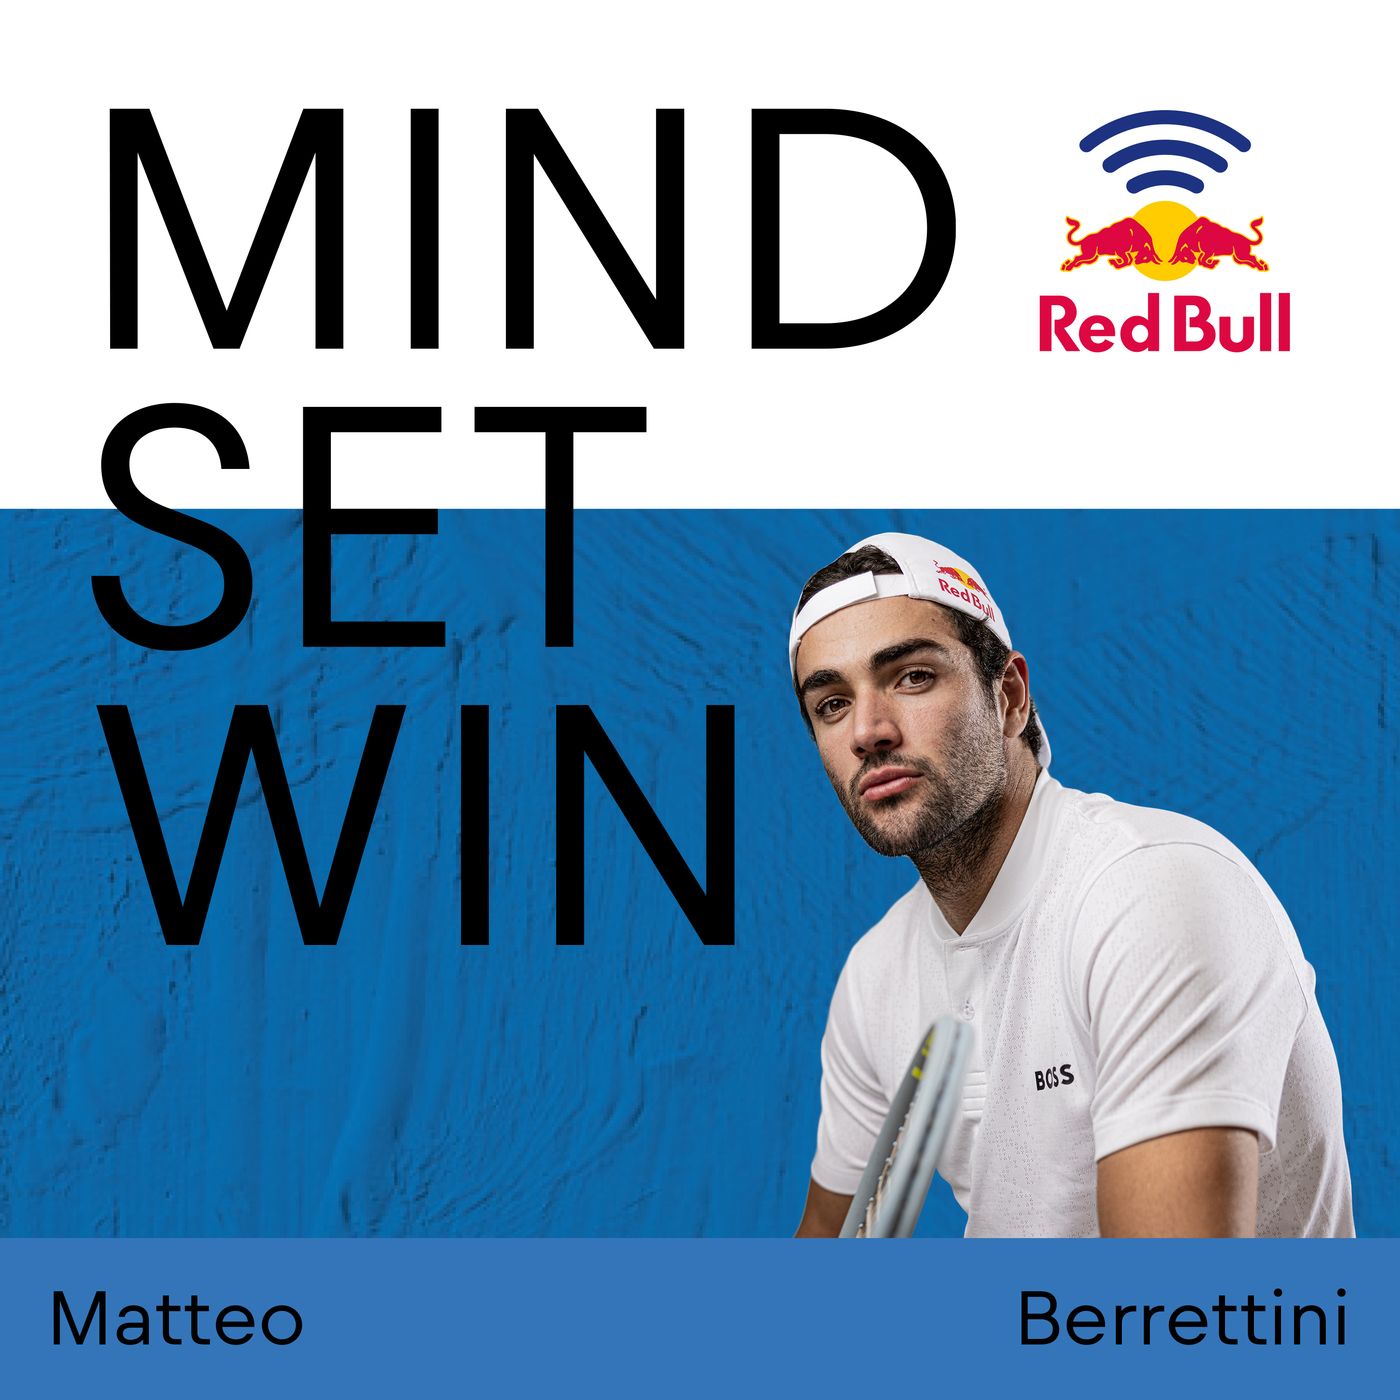 Tennis player and Wimbledon finalist Matteo Berrettini – bouncing back from failure